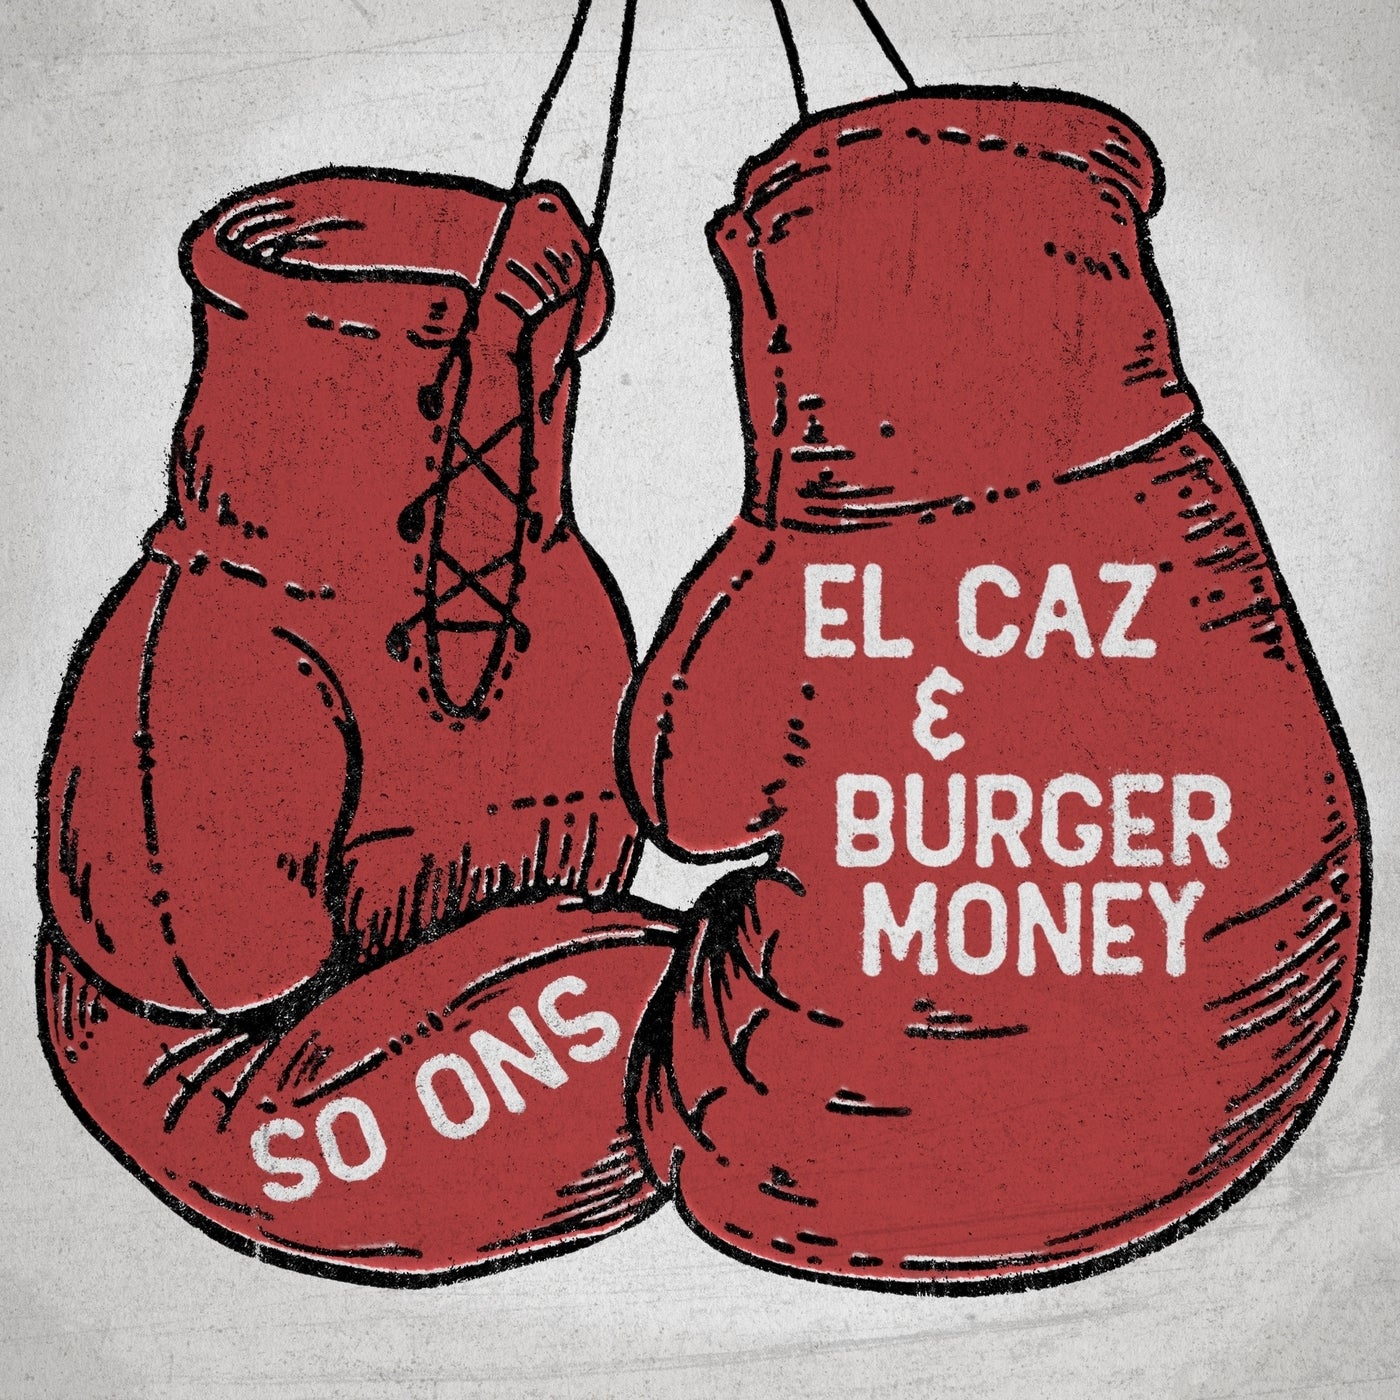 El Caz b/w Burger Money